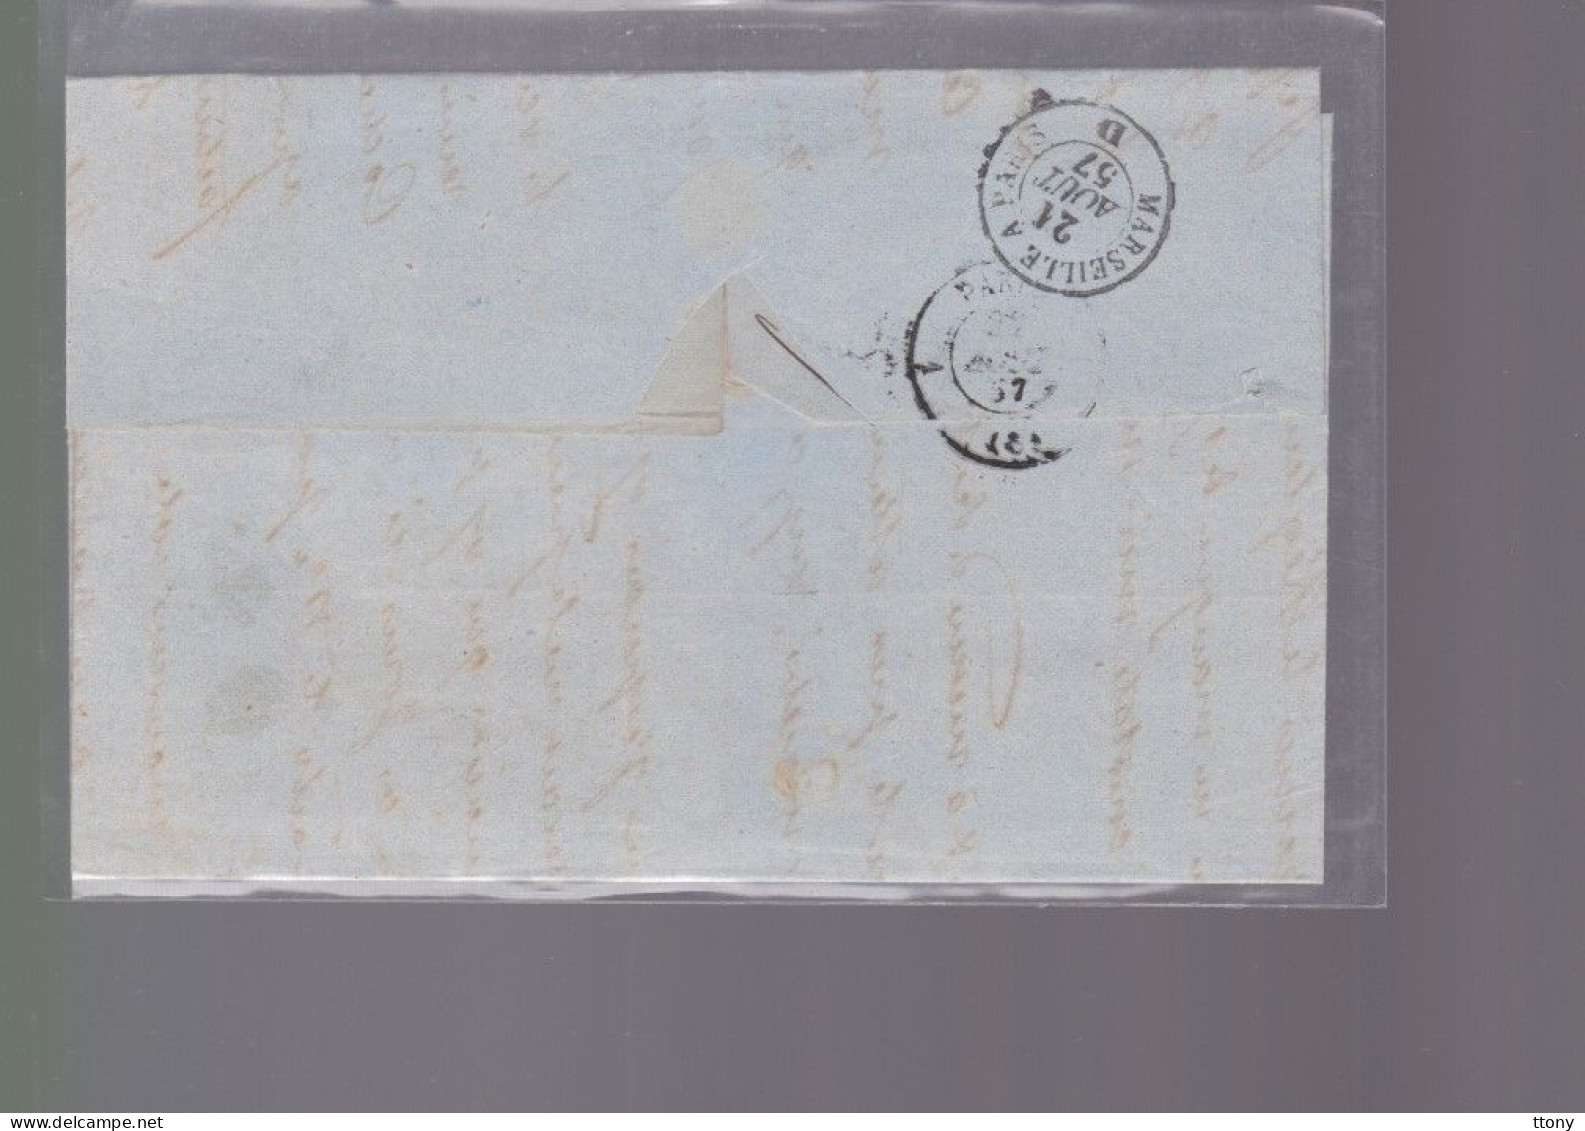 Un  Timbre  Napoléon III   N°  14     20 C Bleu   Sur  Lettre      1854   Destination    Grandvilliers - 1849-1876: Periodo Classico